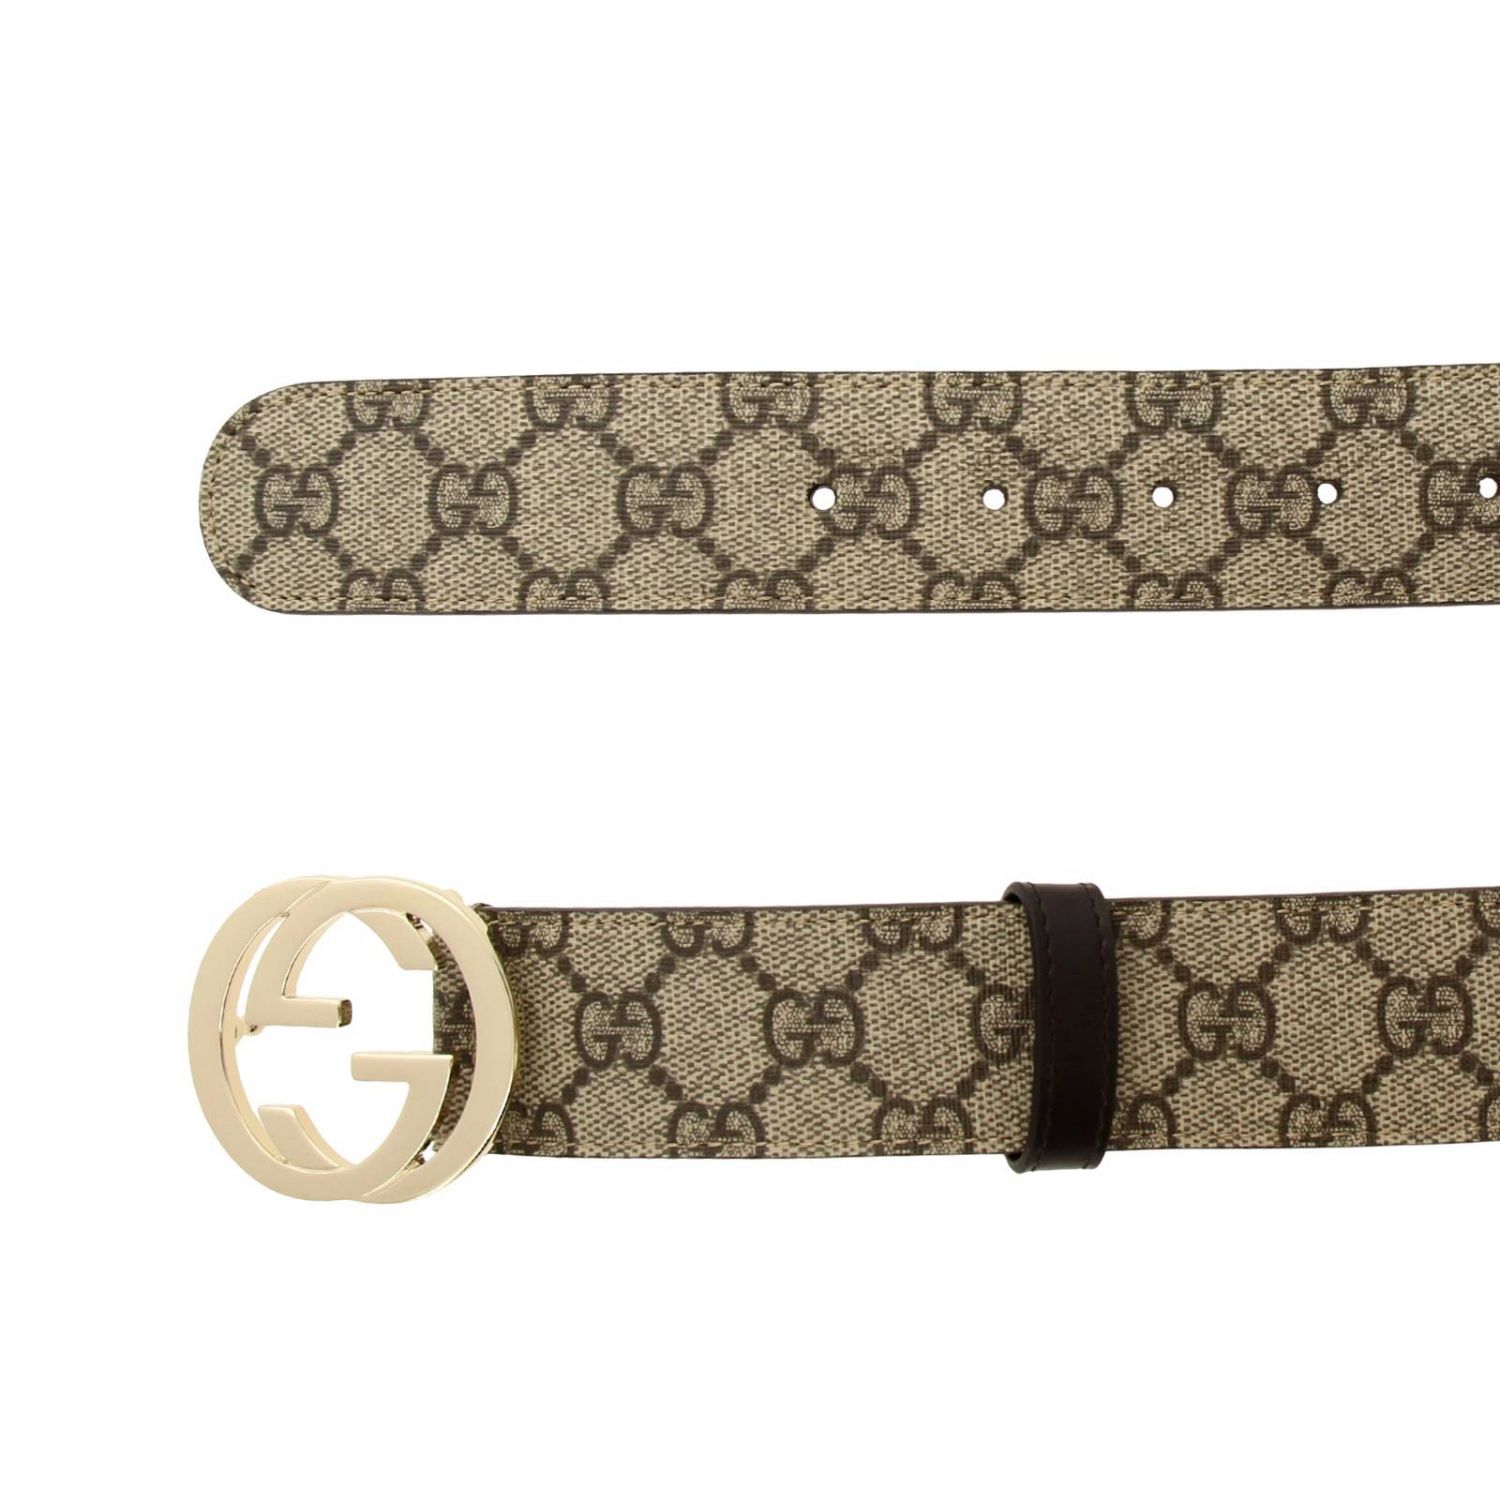 GUCCI: Supreme leather belt - Beige | Belt Gucci 370543 KGDHG GIGLIO.COM